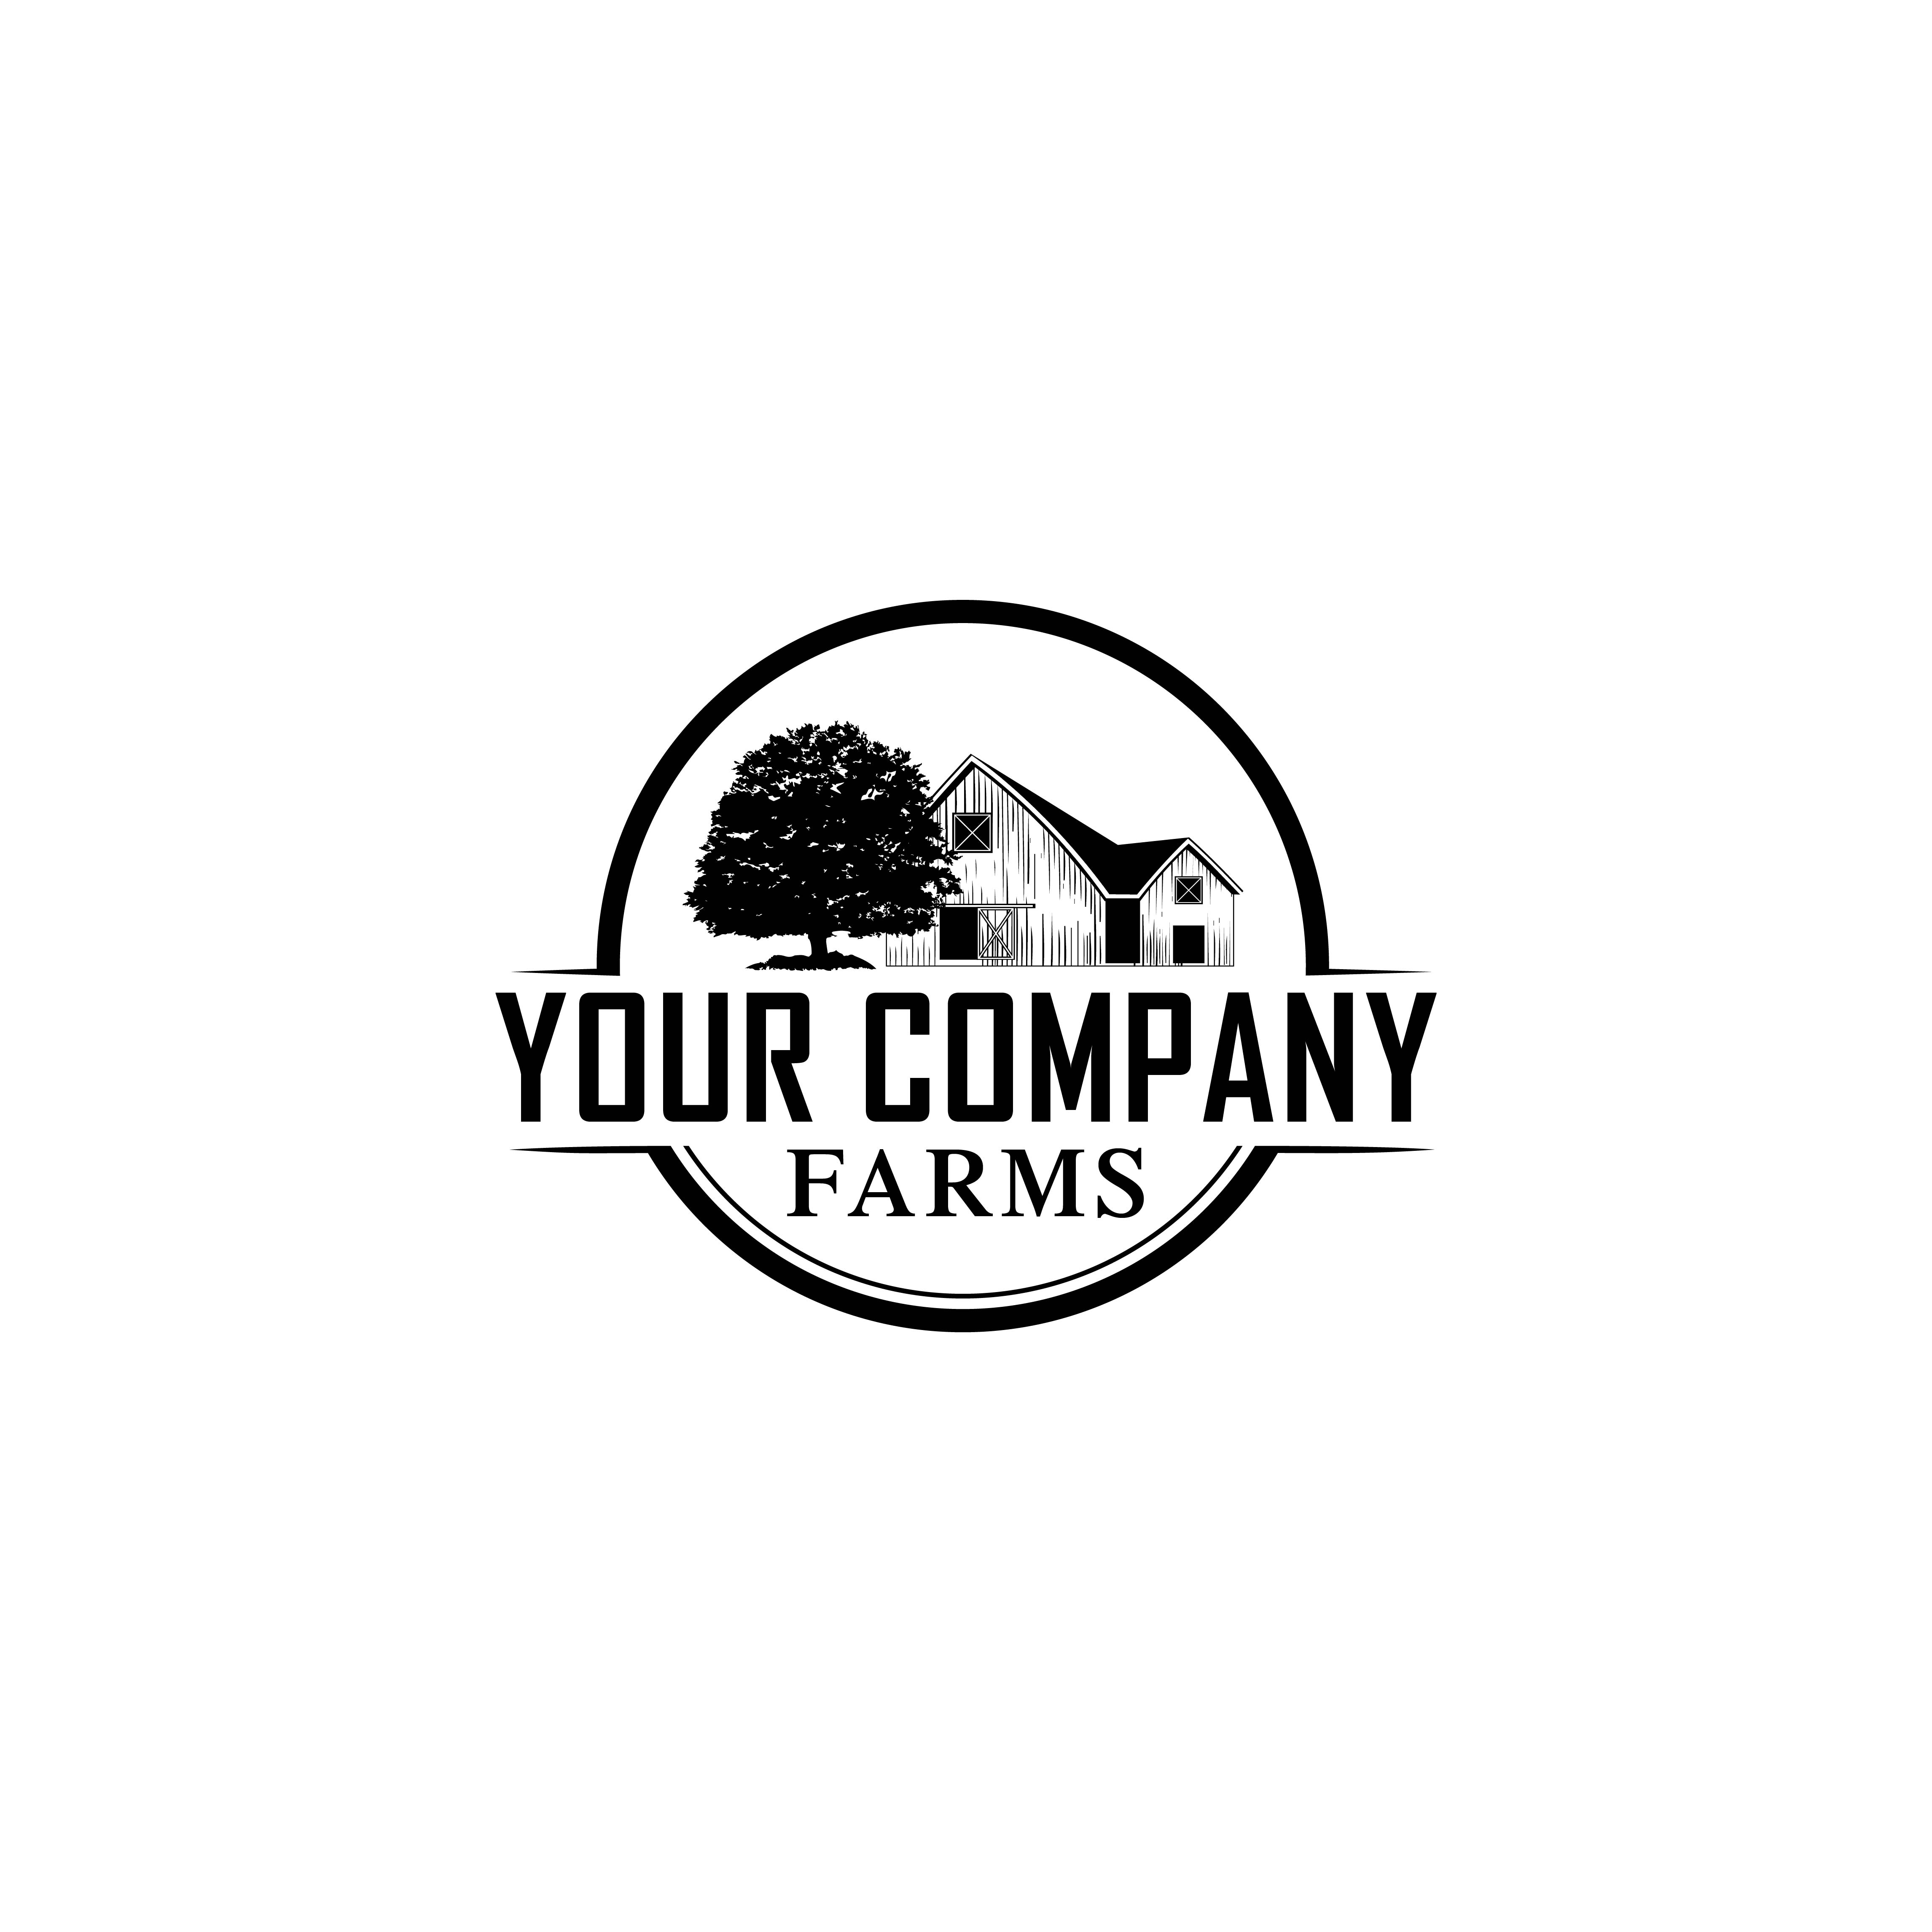 Elegant Pictorial Logo design for farm house cover image.